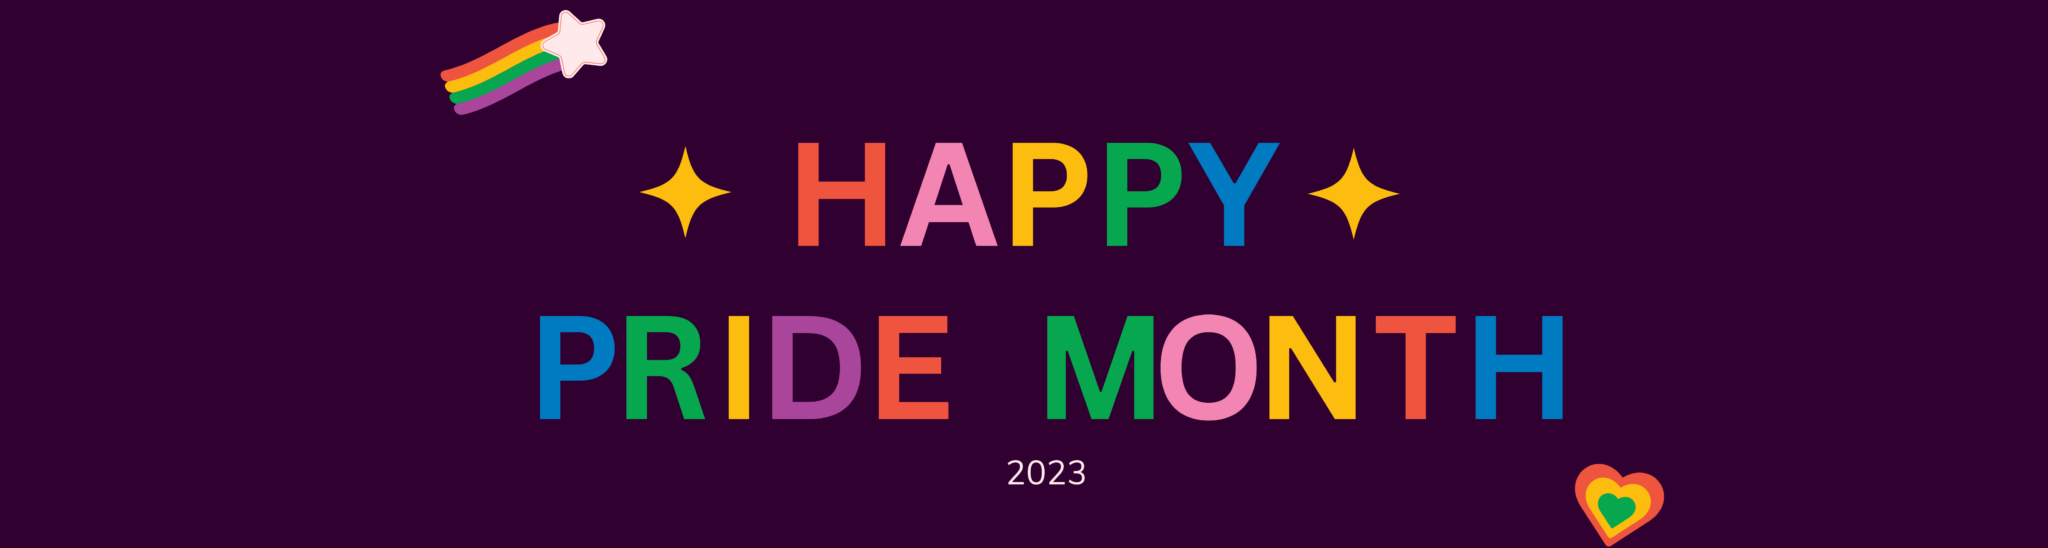 Happy Pride Month 2023 UC Berkeley Library Update